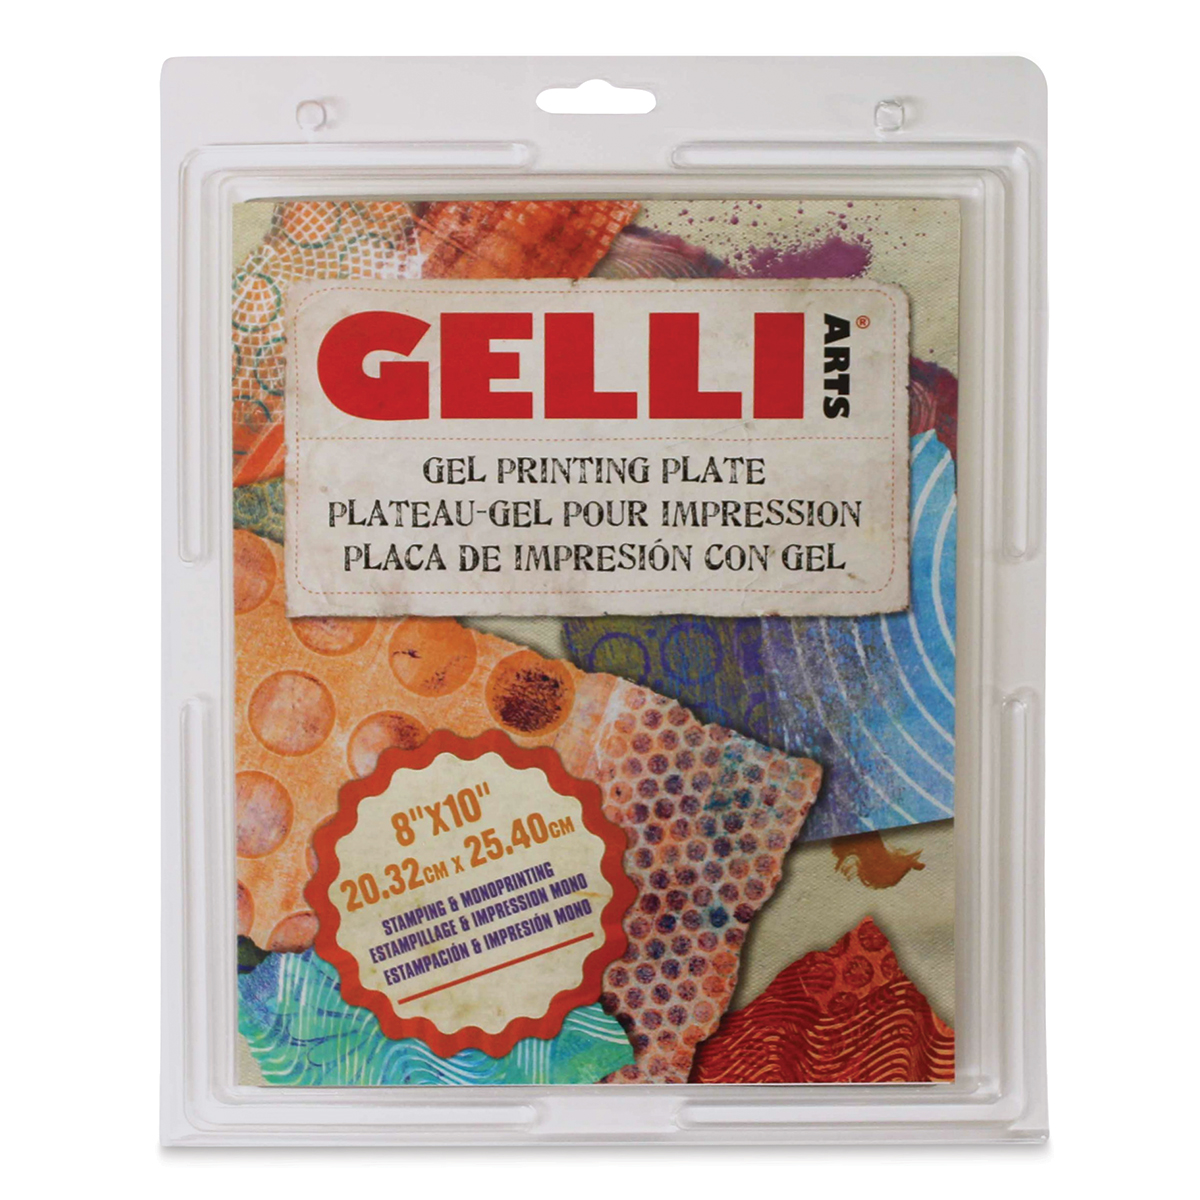 Gelli Arts Printing Plate - 3 x 5 